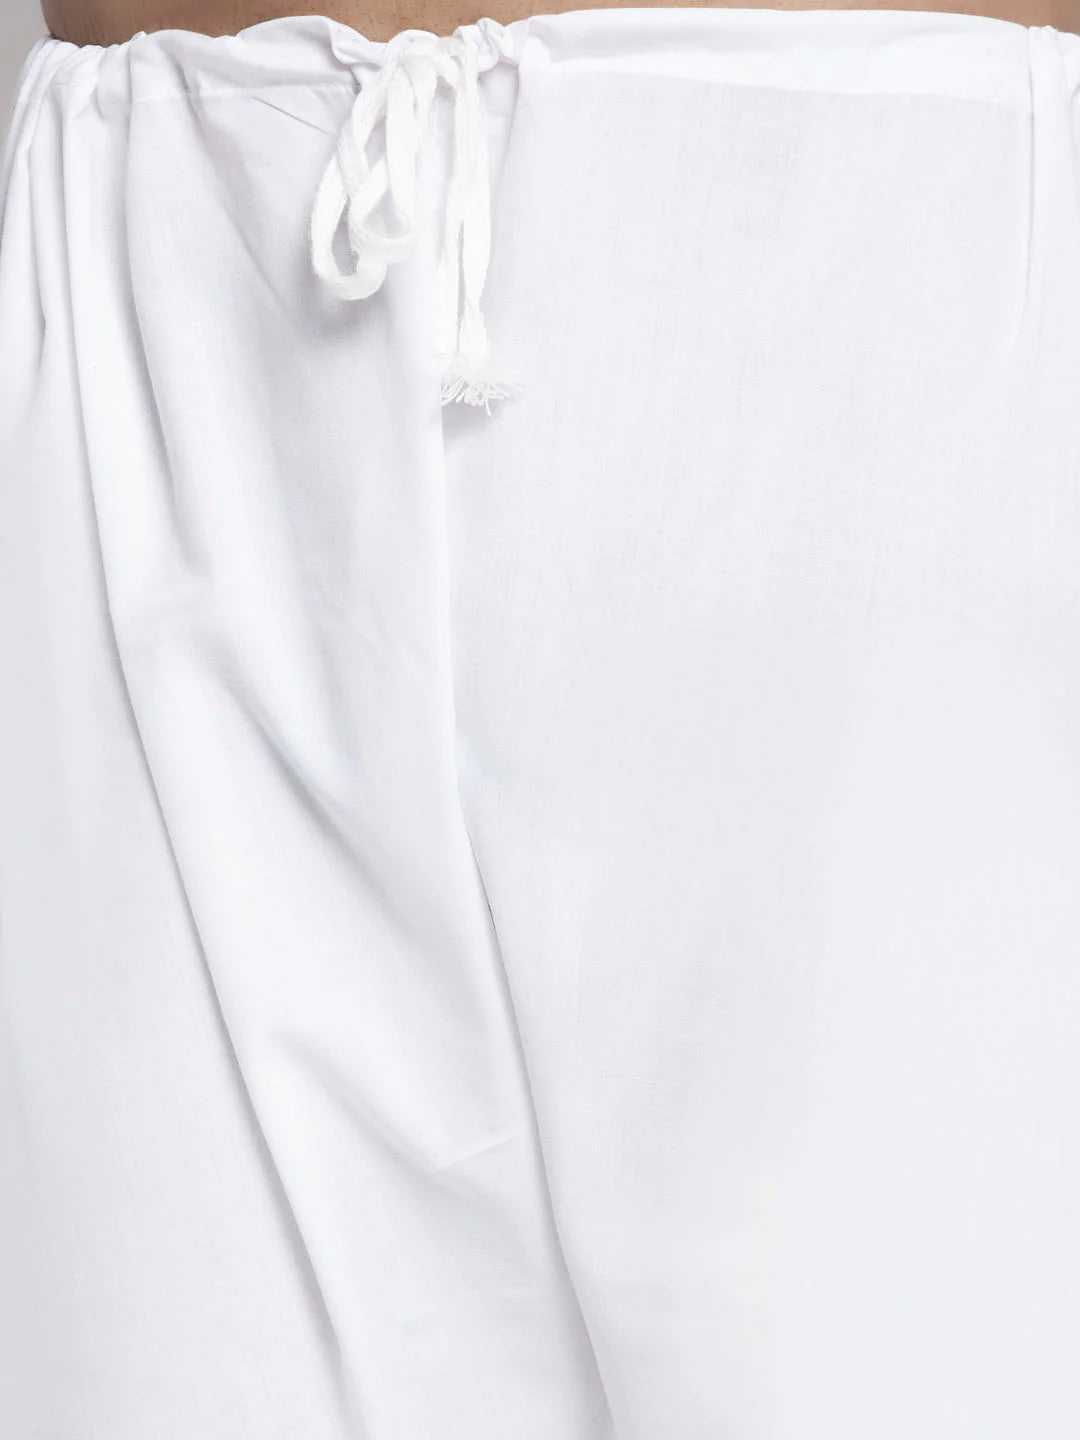 Jompers Men Grey & White Self Design Kurta with Pyjamas ( JOKP 638 Grey )